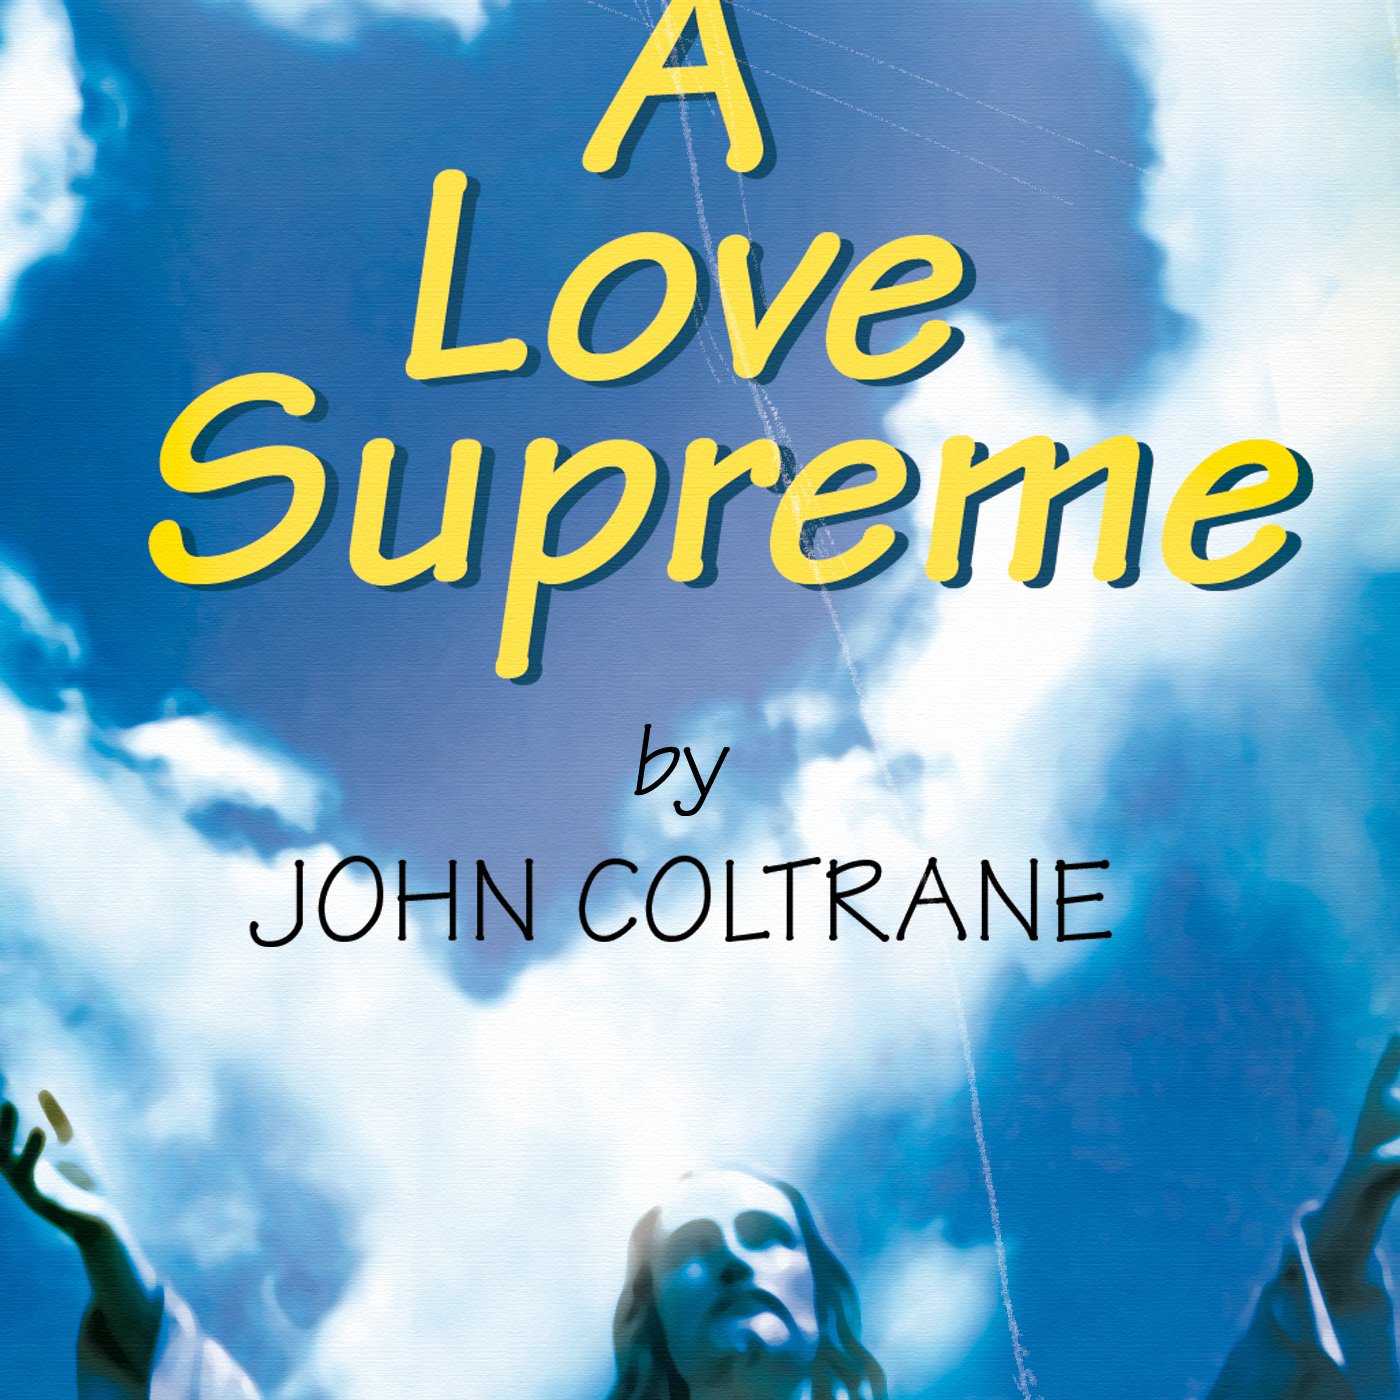 A Love Supreme by Ashley Kahn